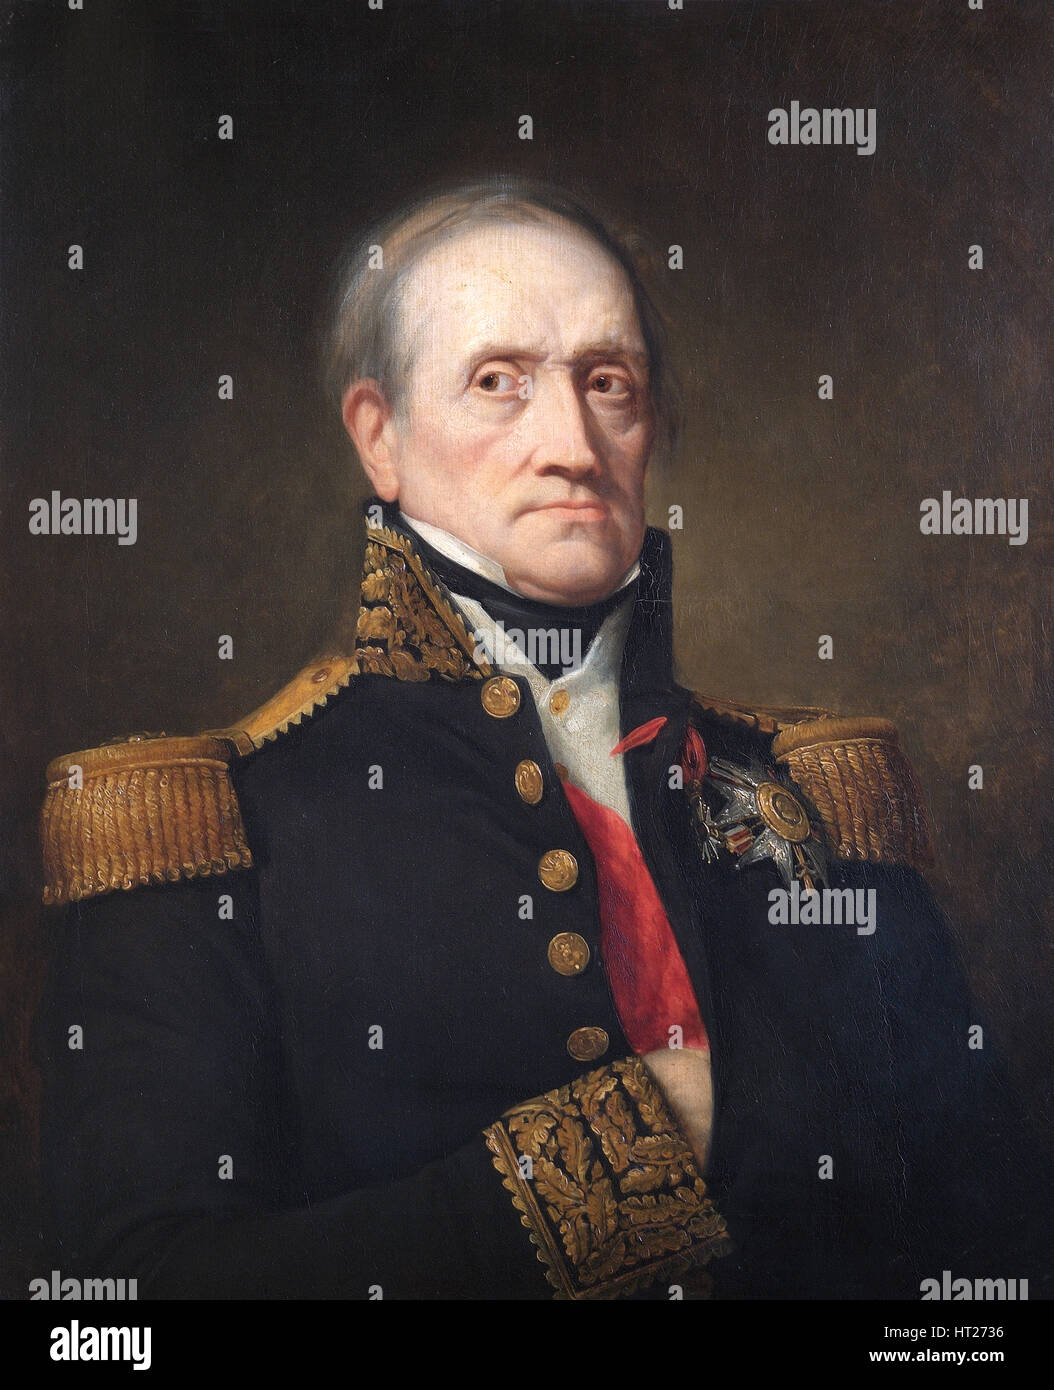 Portrait of Marshal Nicolas Jean de Dieu Soult, Duke of Dalmatia, French soldier, 1840. Artist: George Peter Alexander Healy. Stock Photo